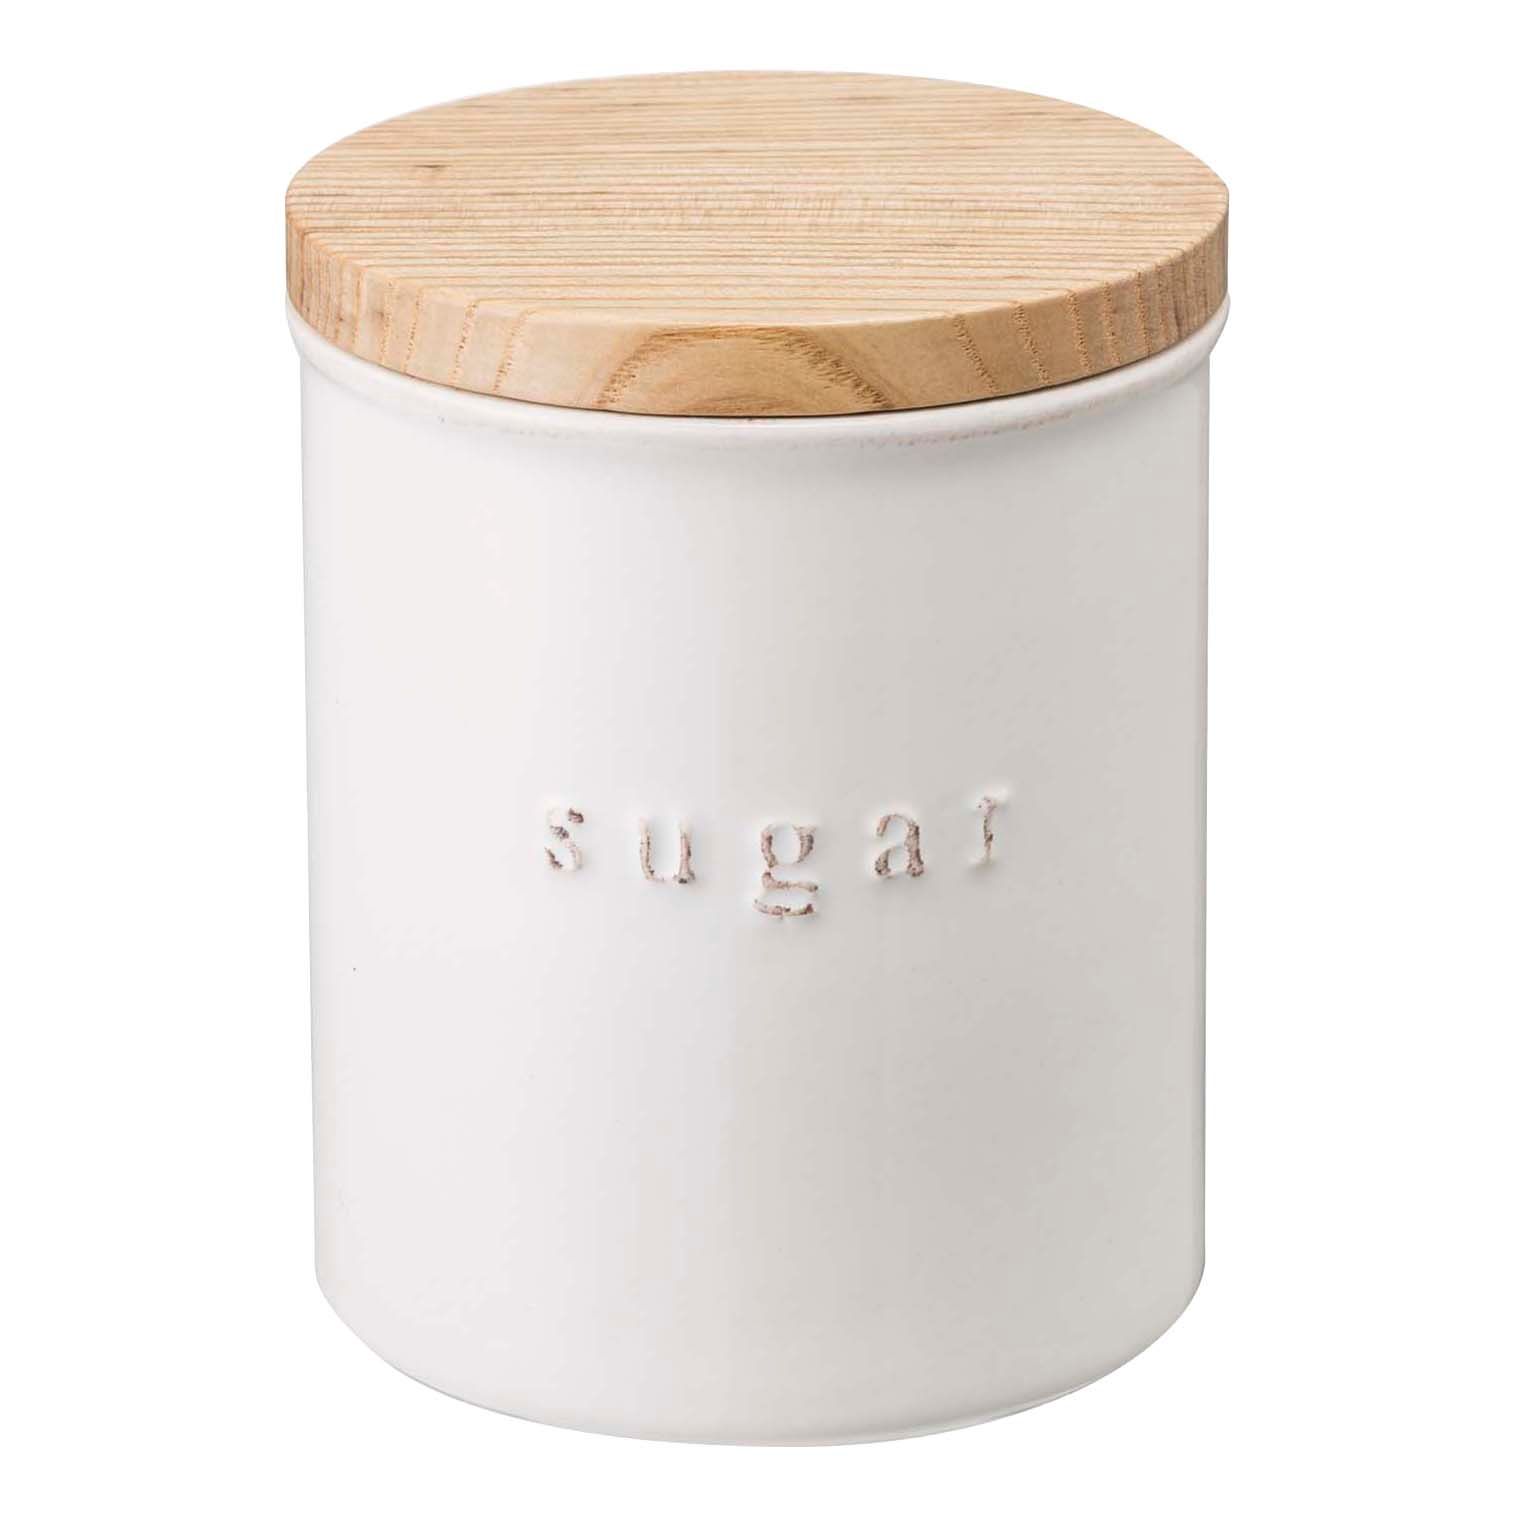 Yamazaki Tosca Ceramic Sugar Canister | The Container Store